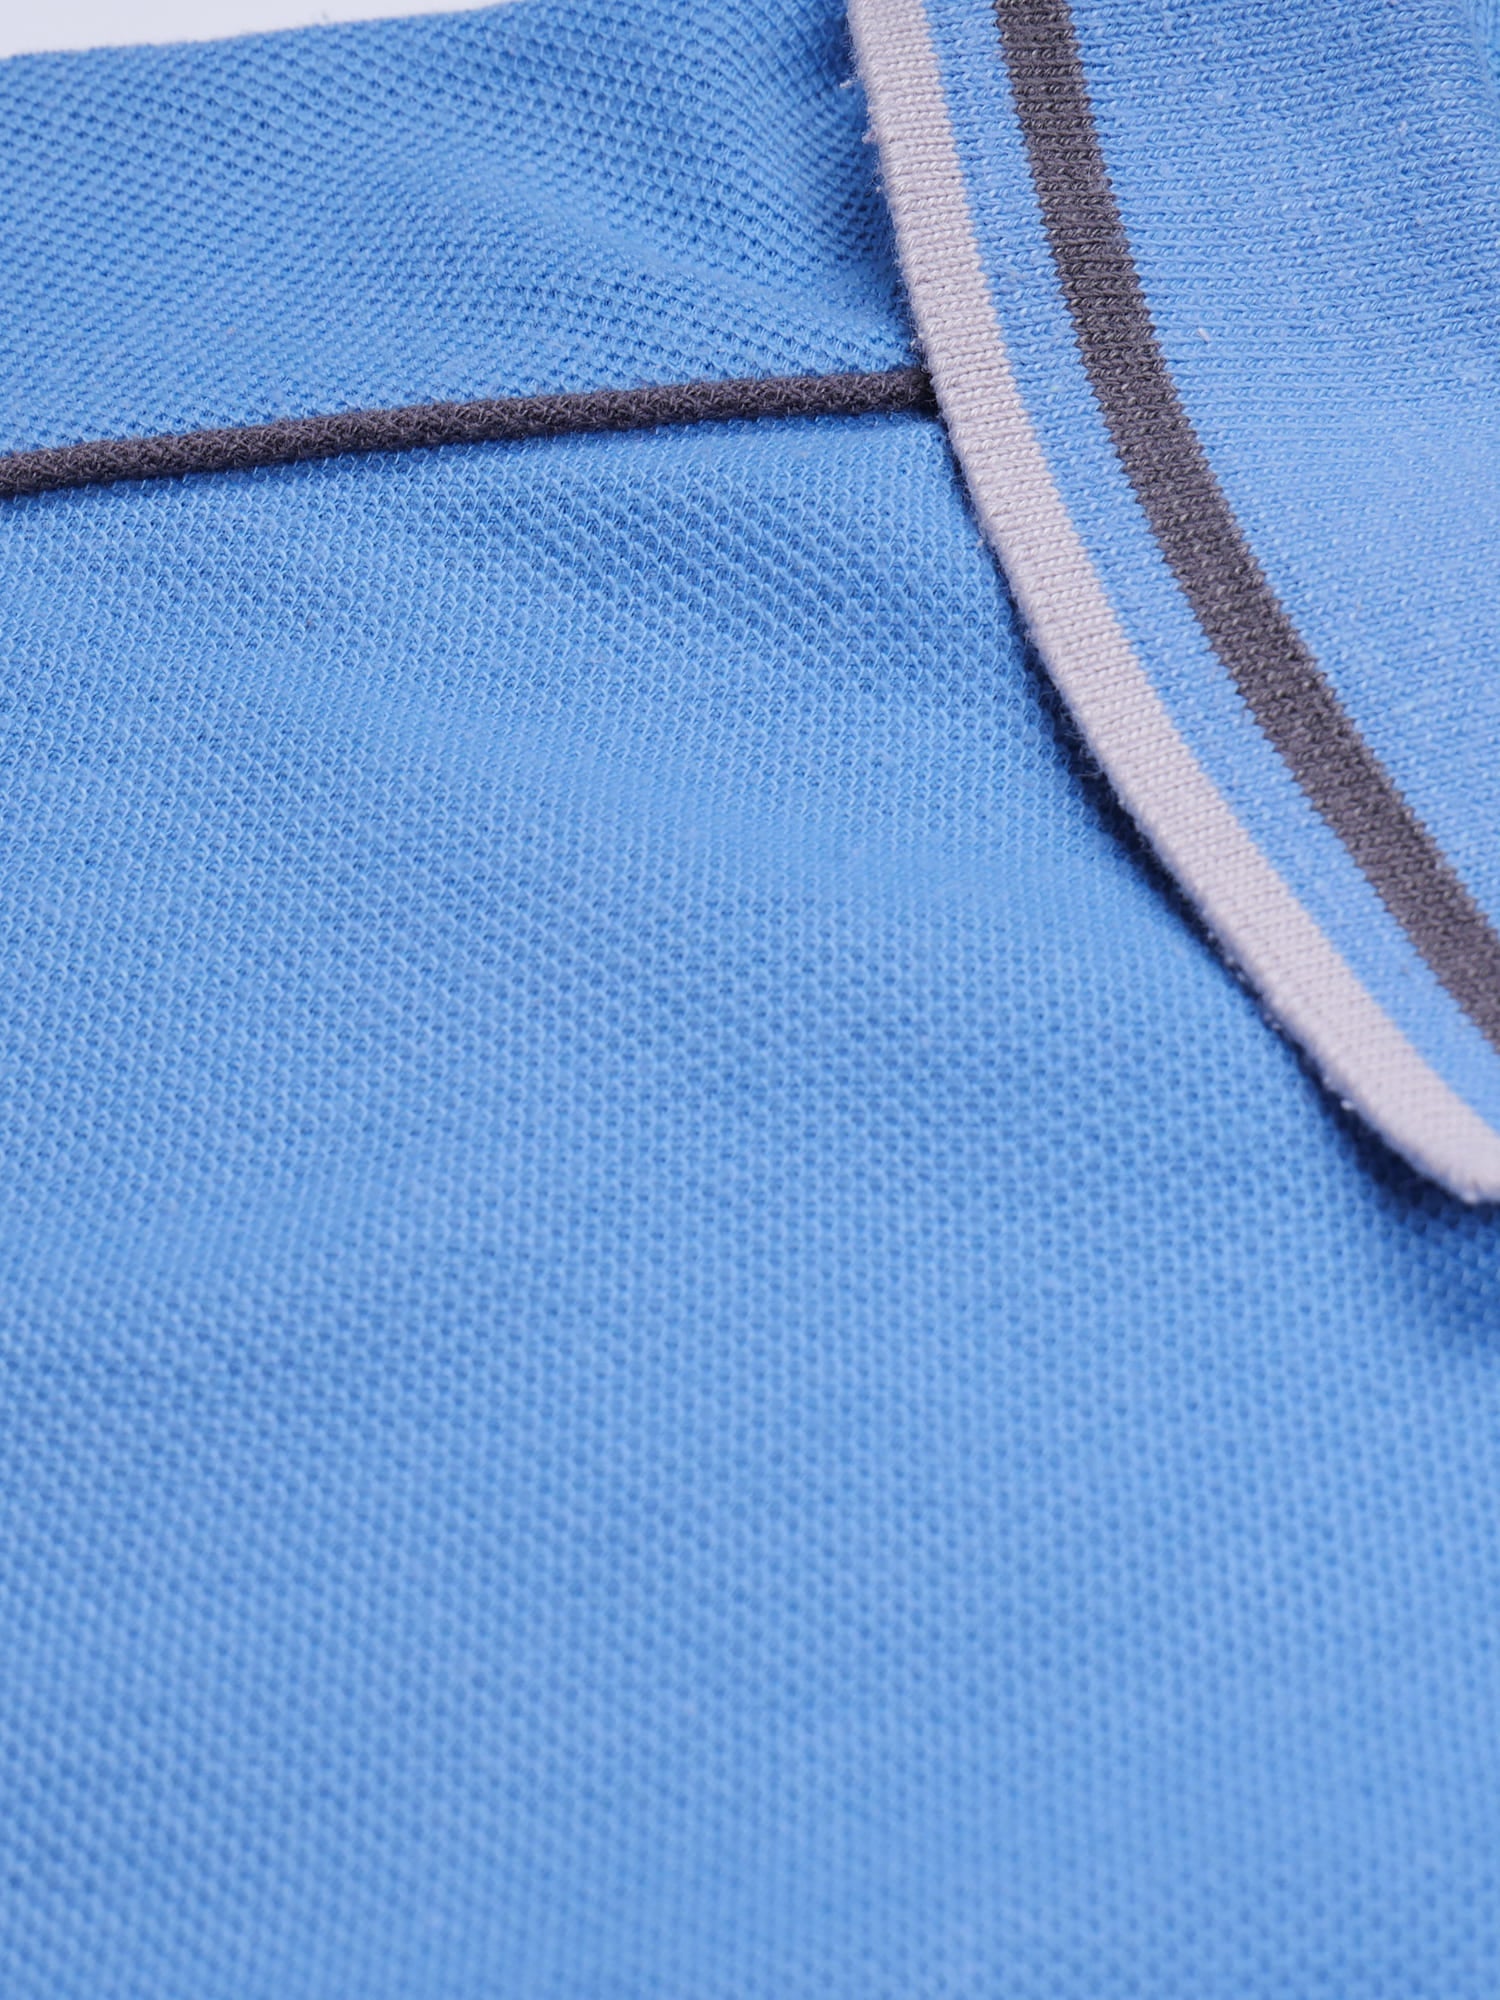 Umbro blau Polo Shirt - Peeces